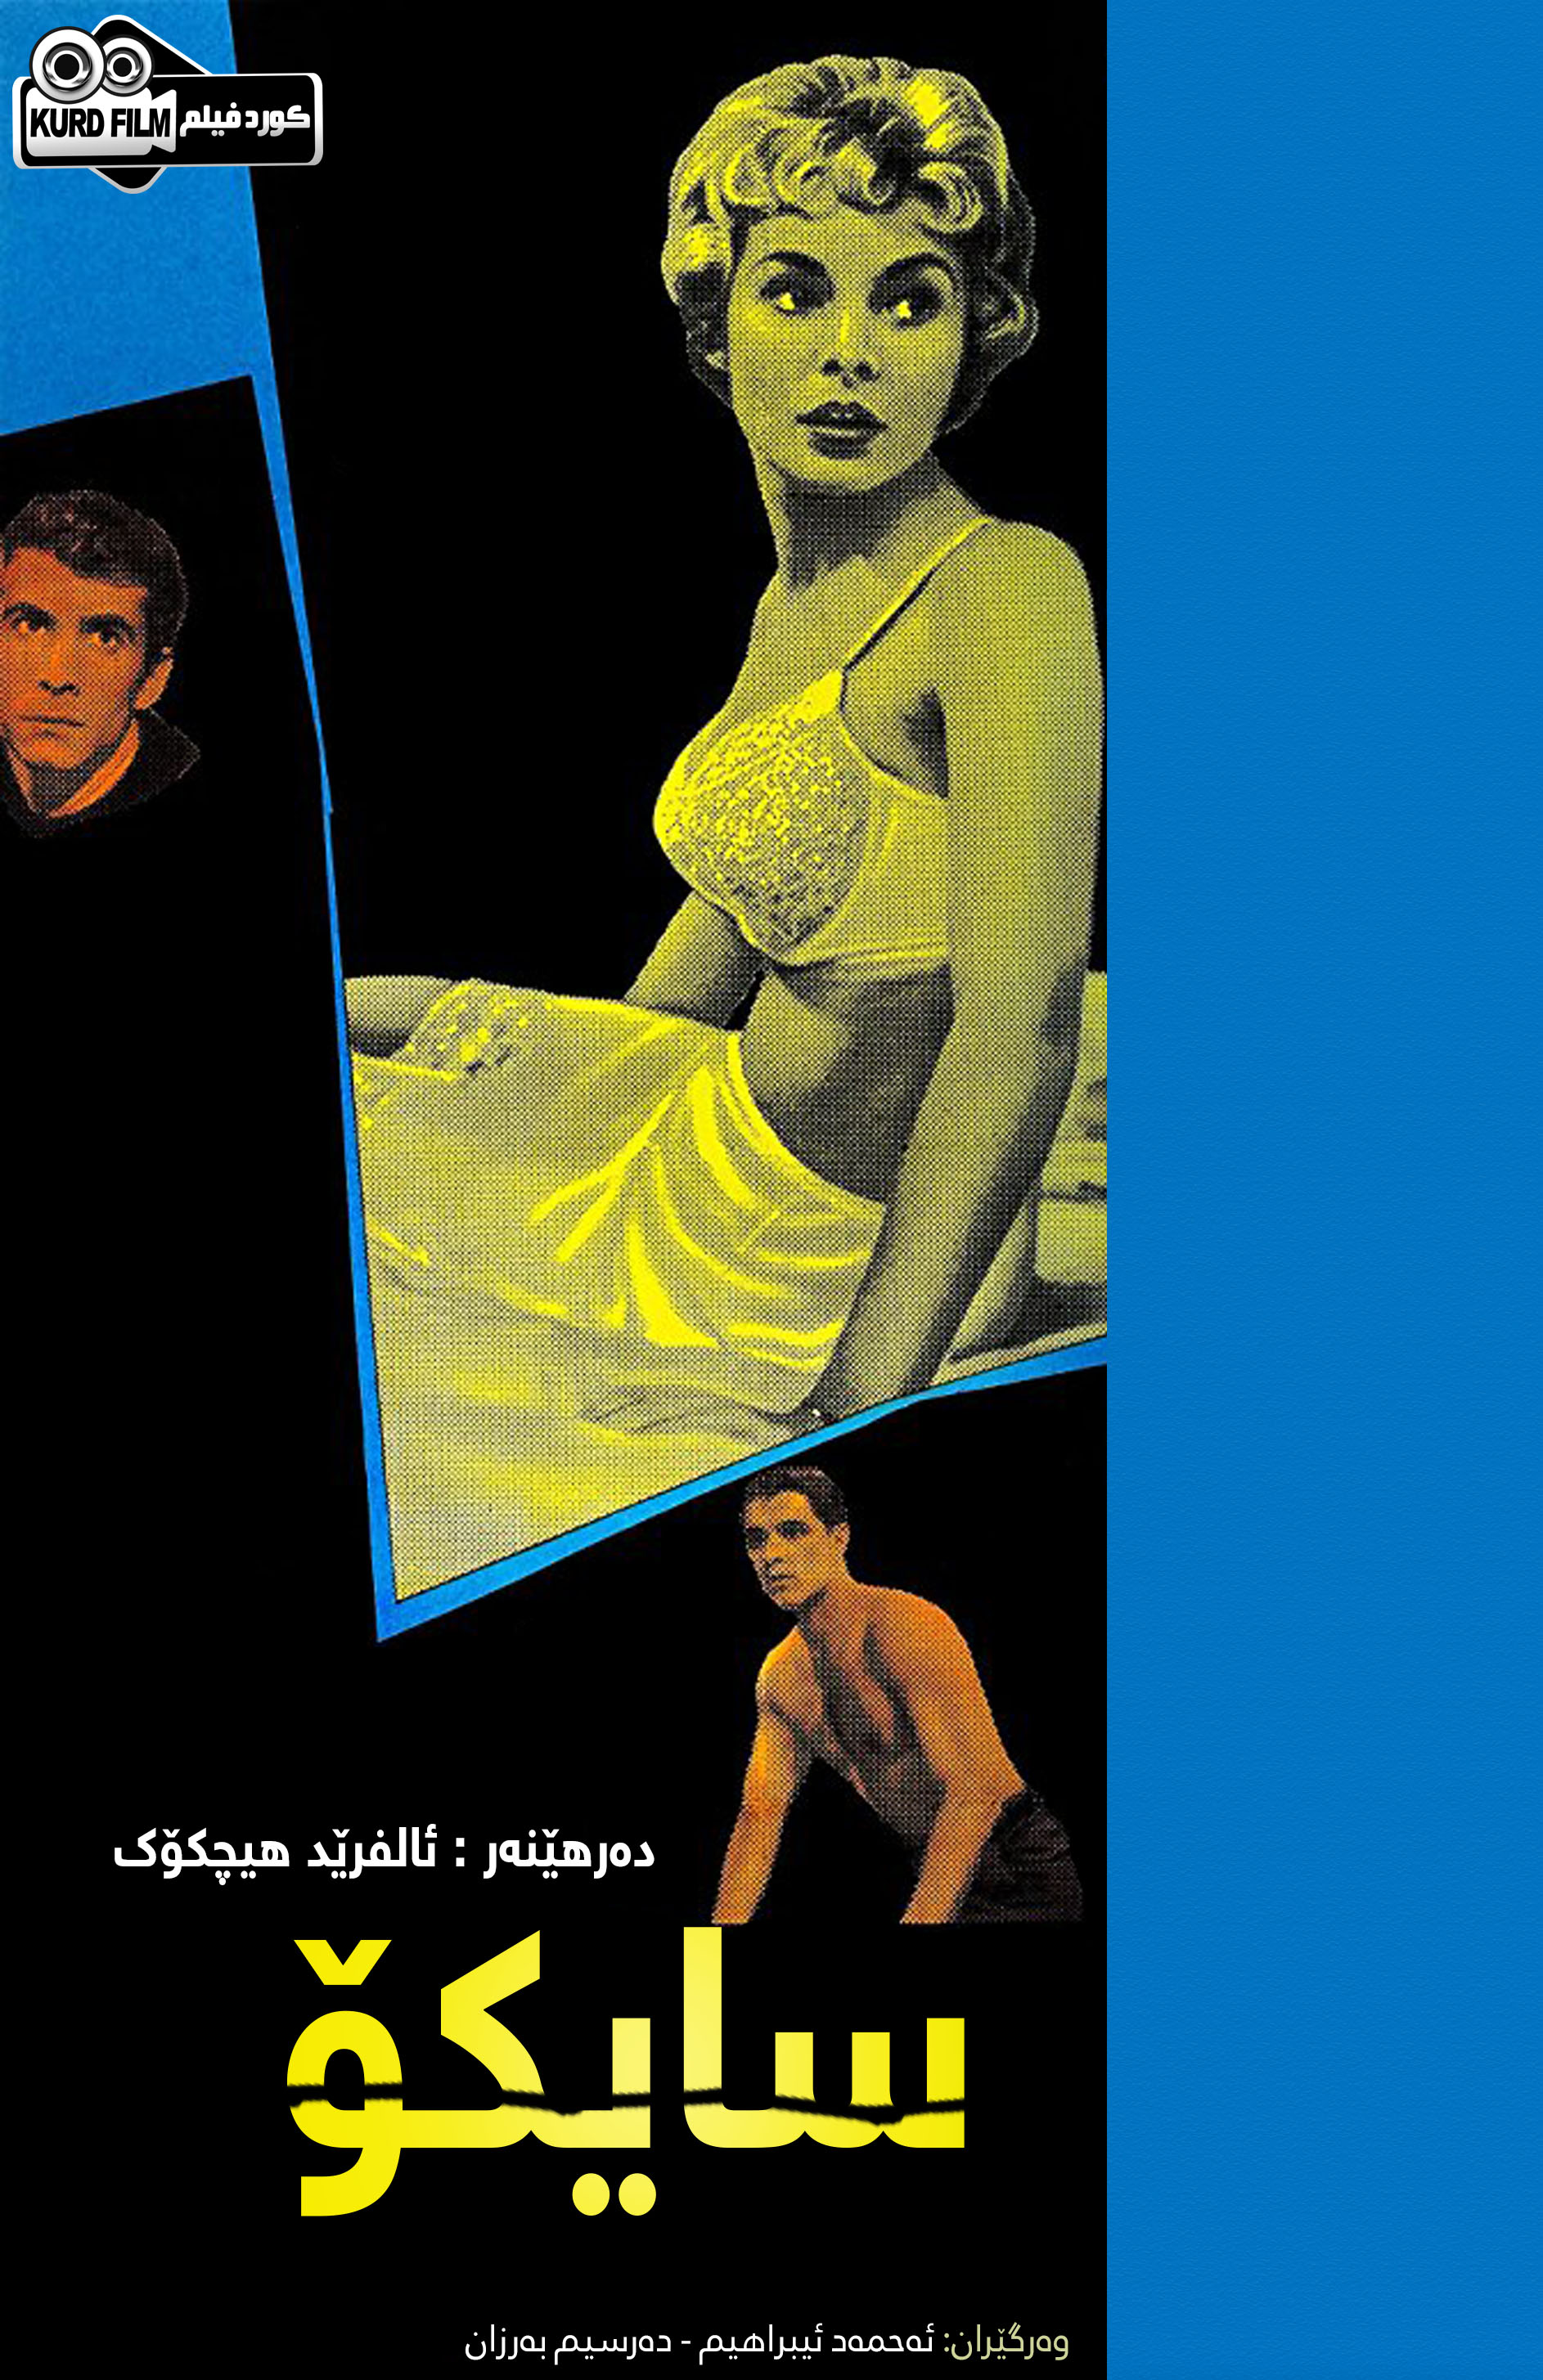  Psycho (1960)